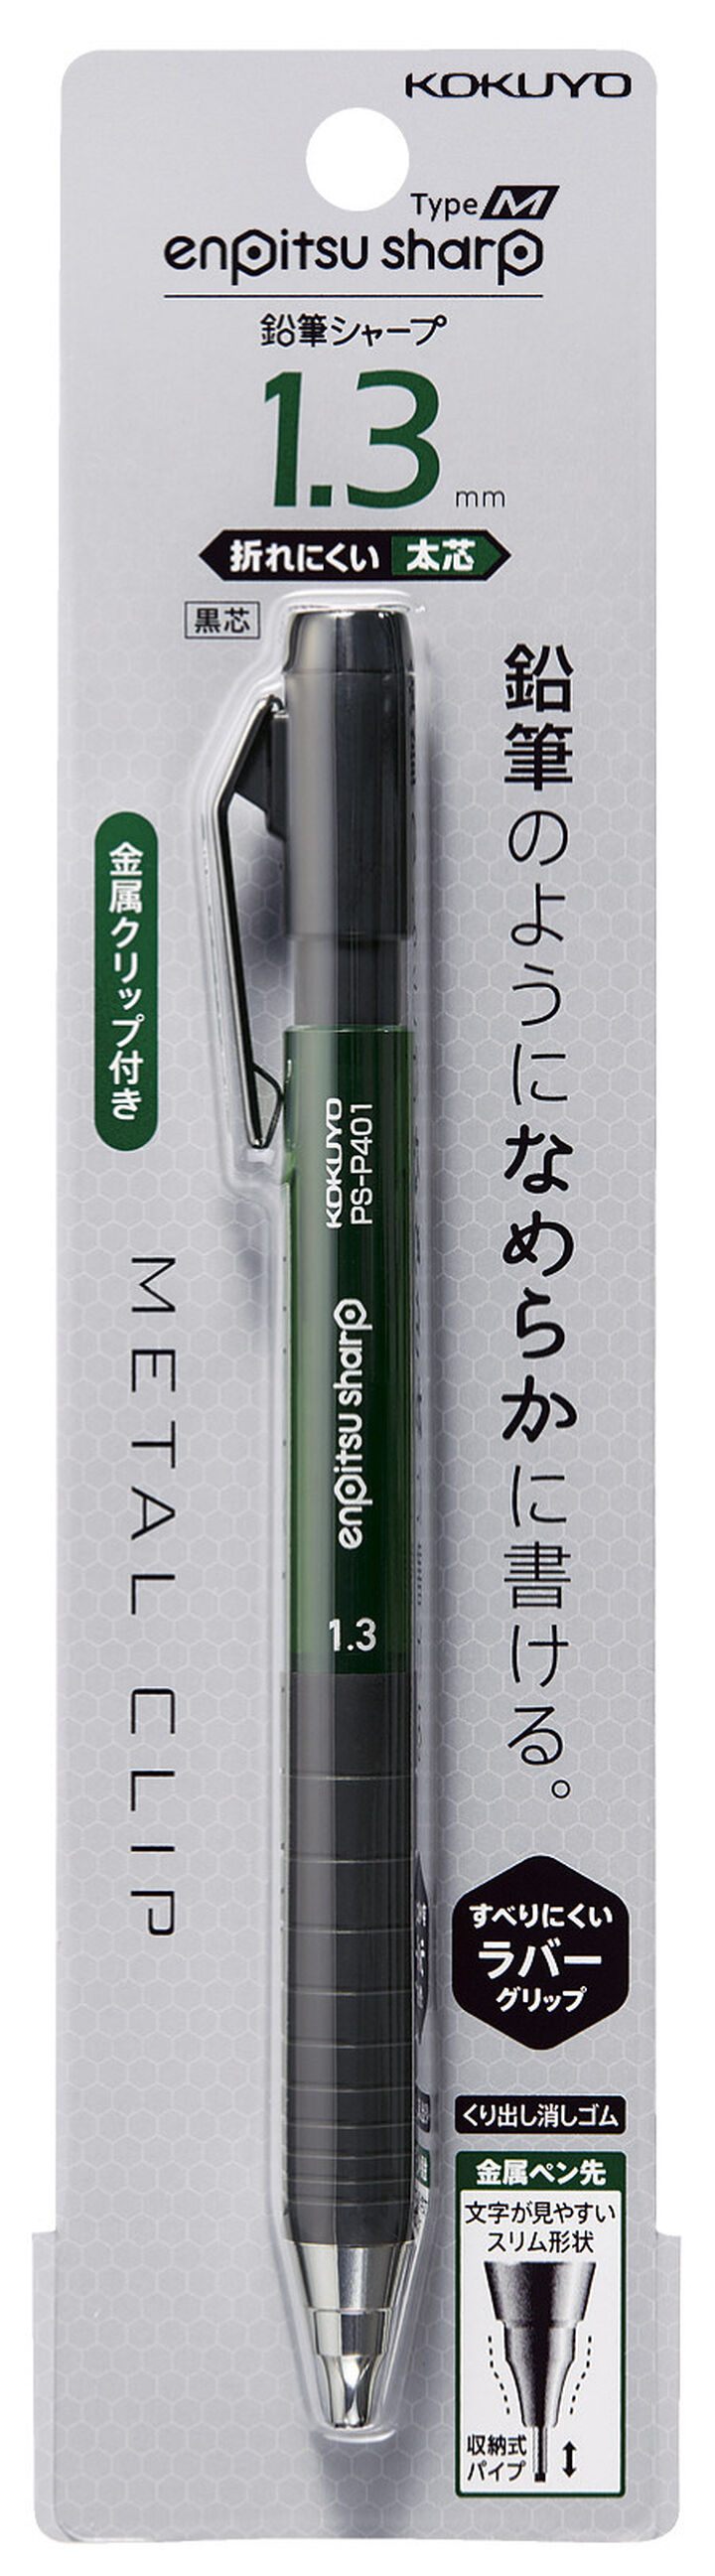 Enpitsu sharp mechanical pencil TypeM 1.3mm Rubber Grip,Green, medium image number 1